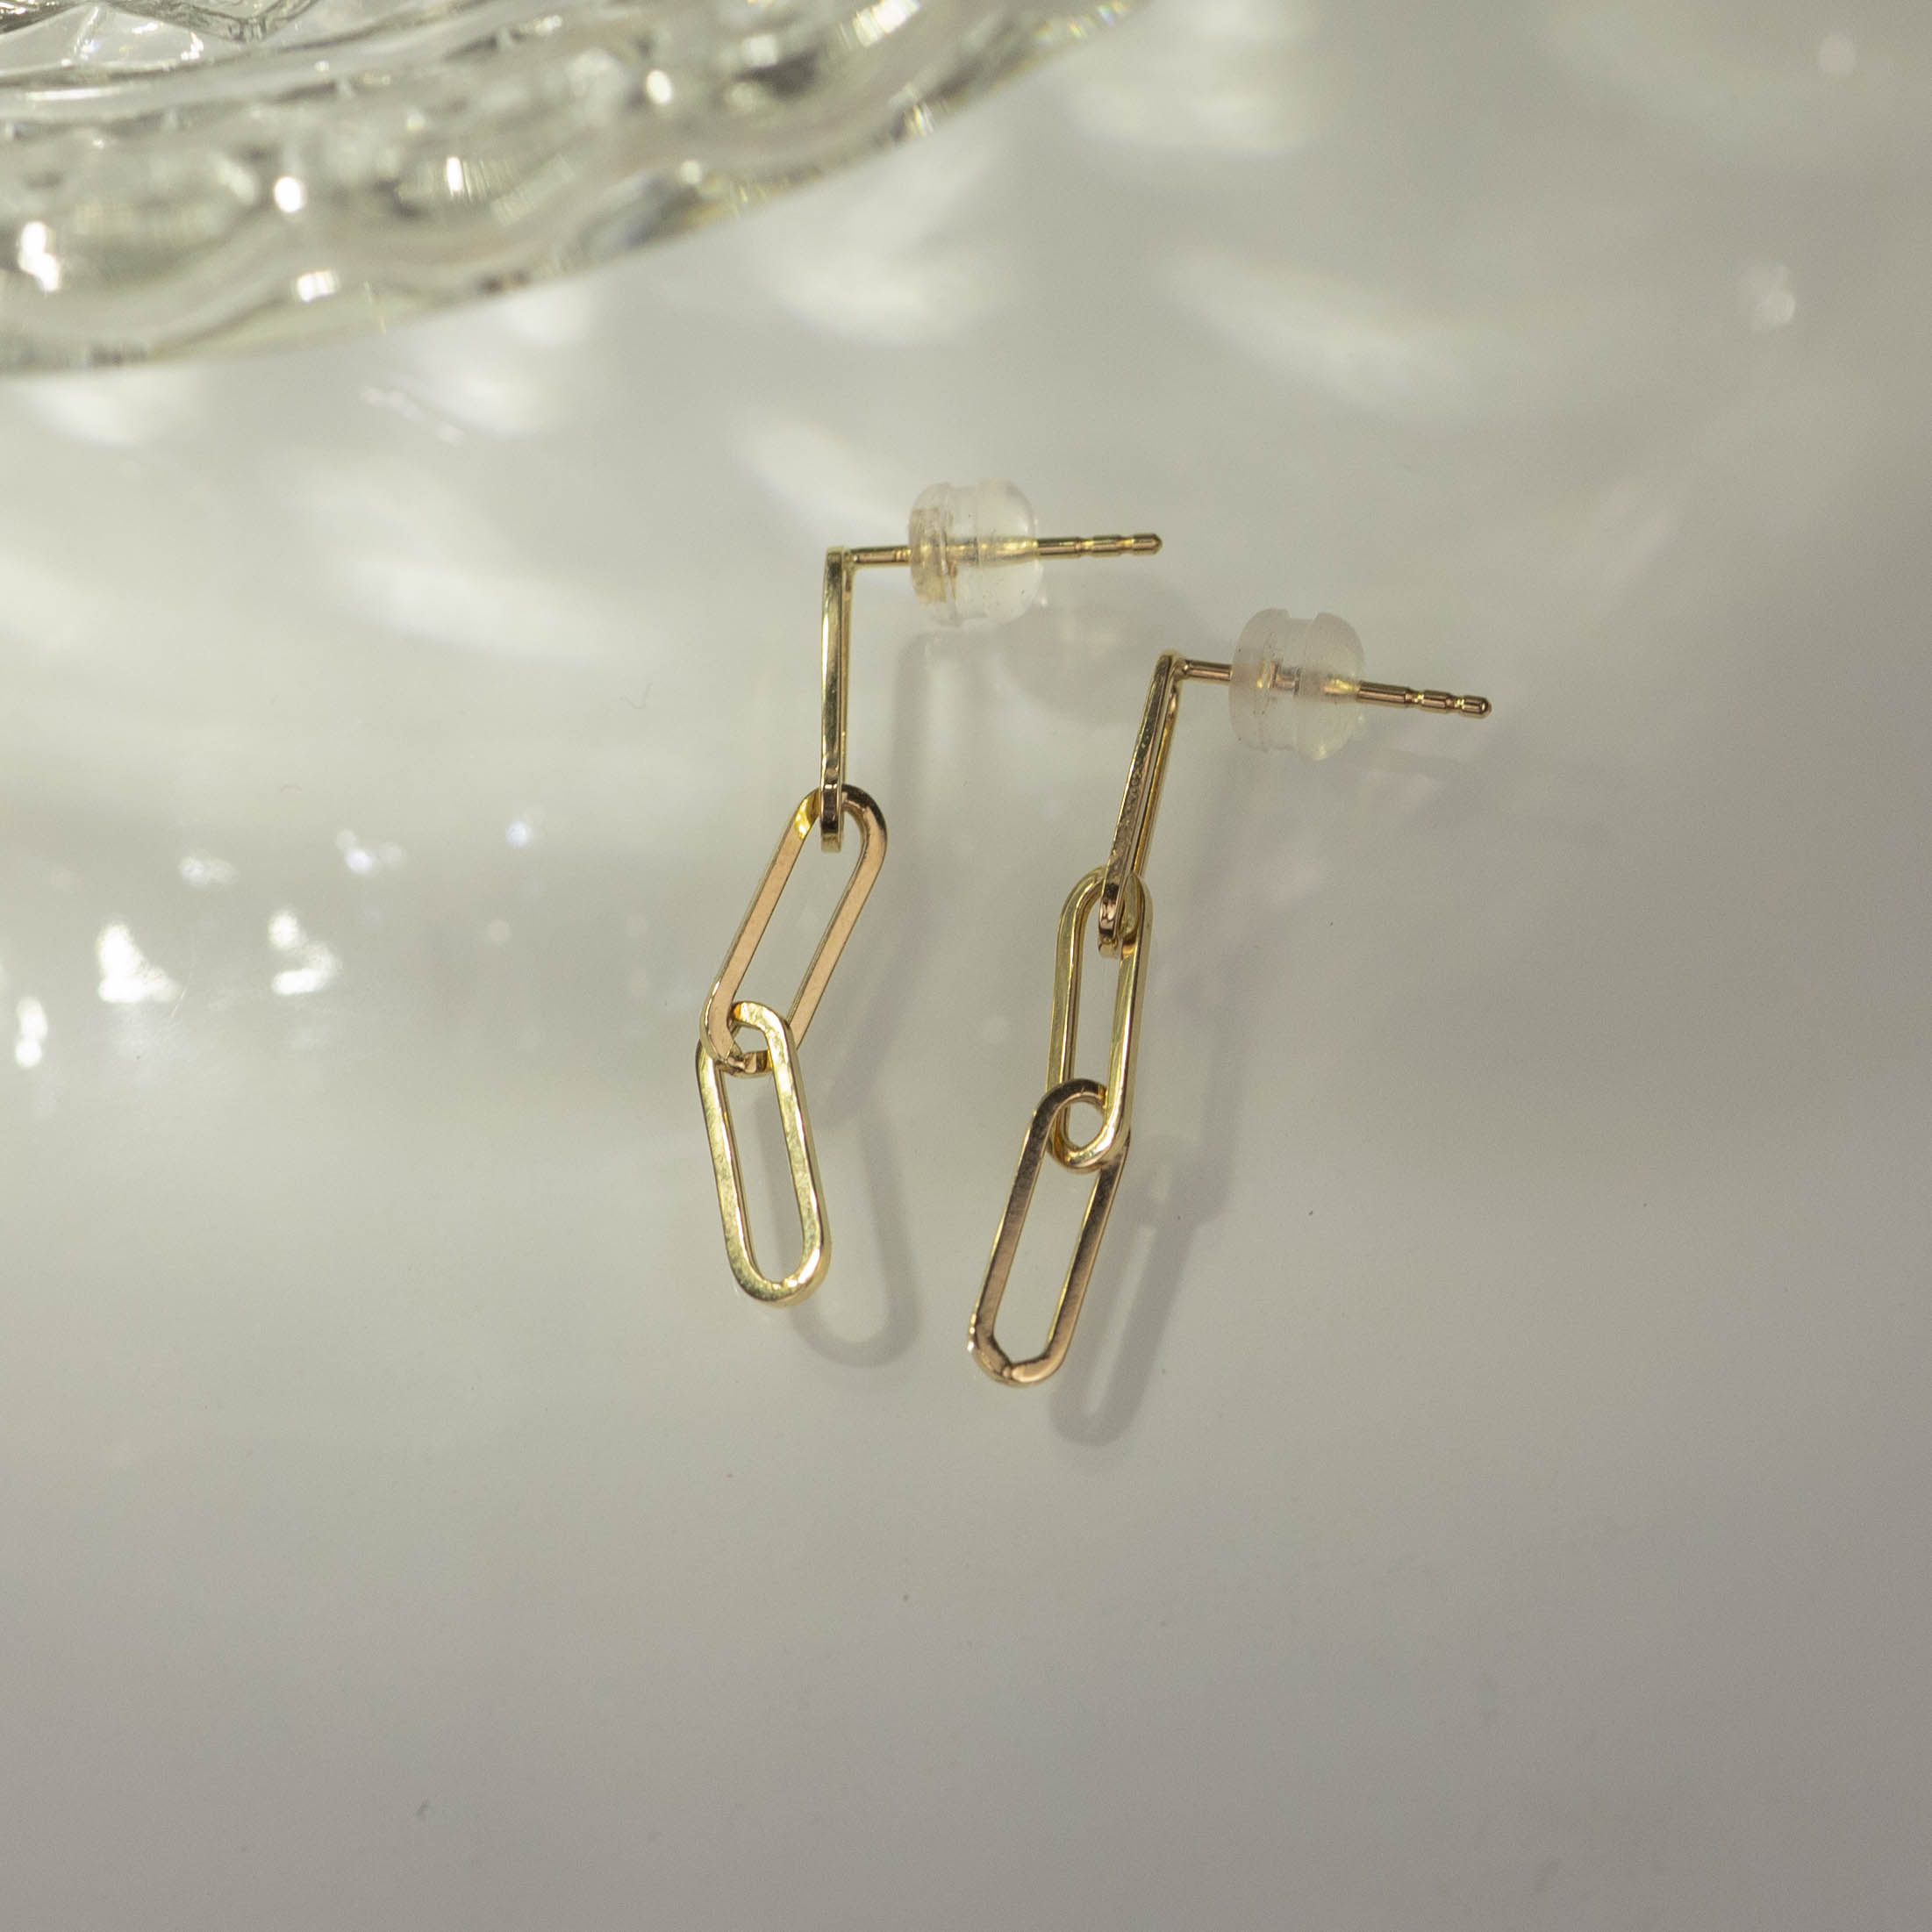 Linked Chain Earrings 18k Yellow Gold E789